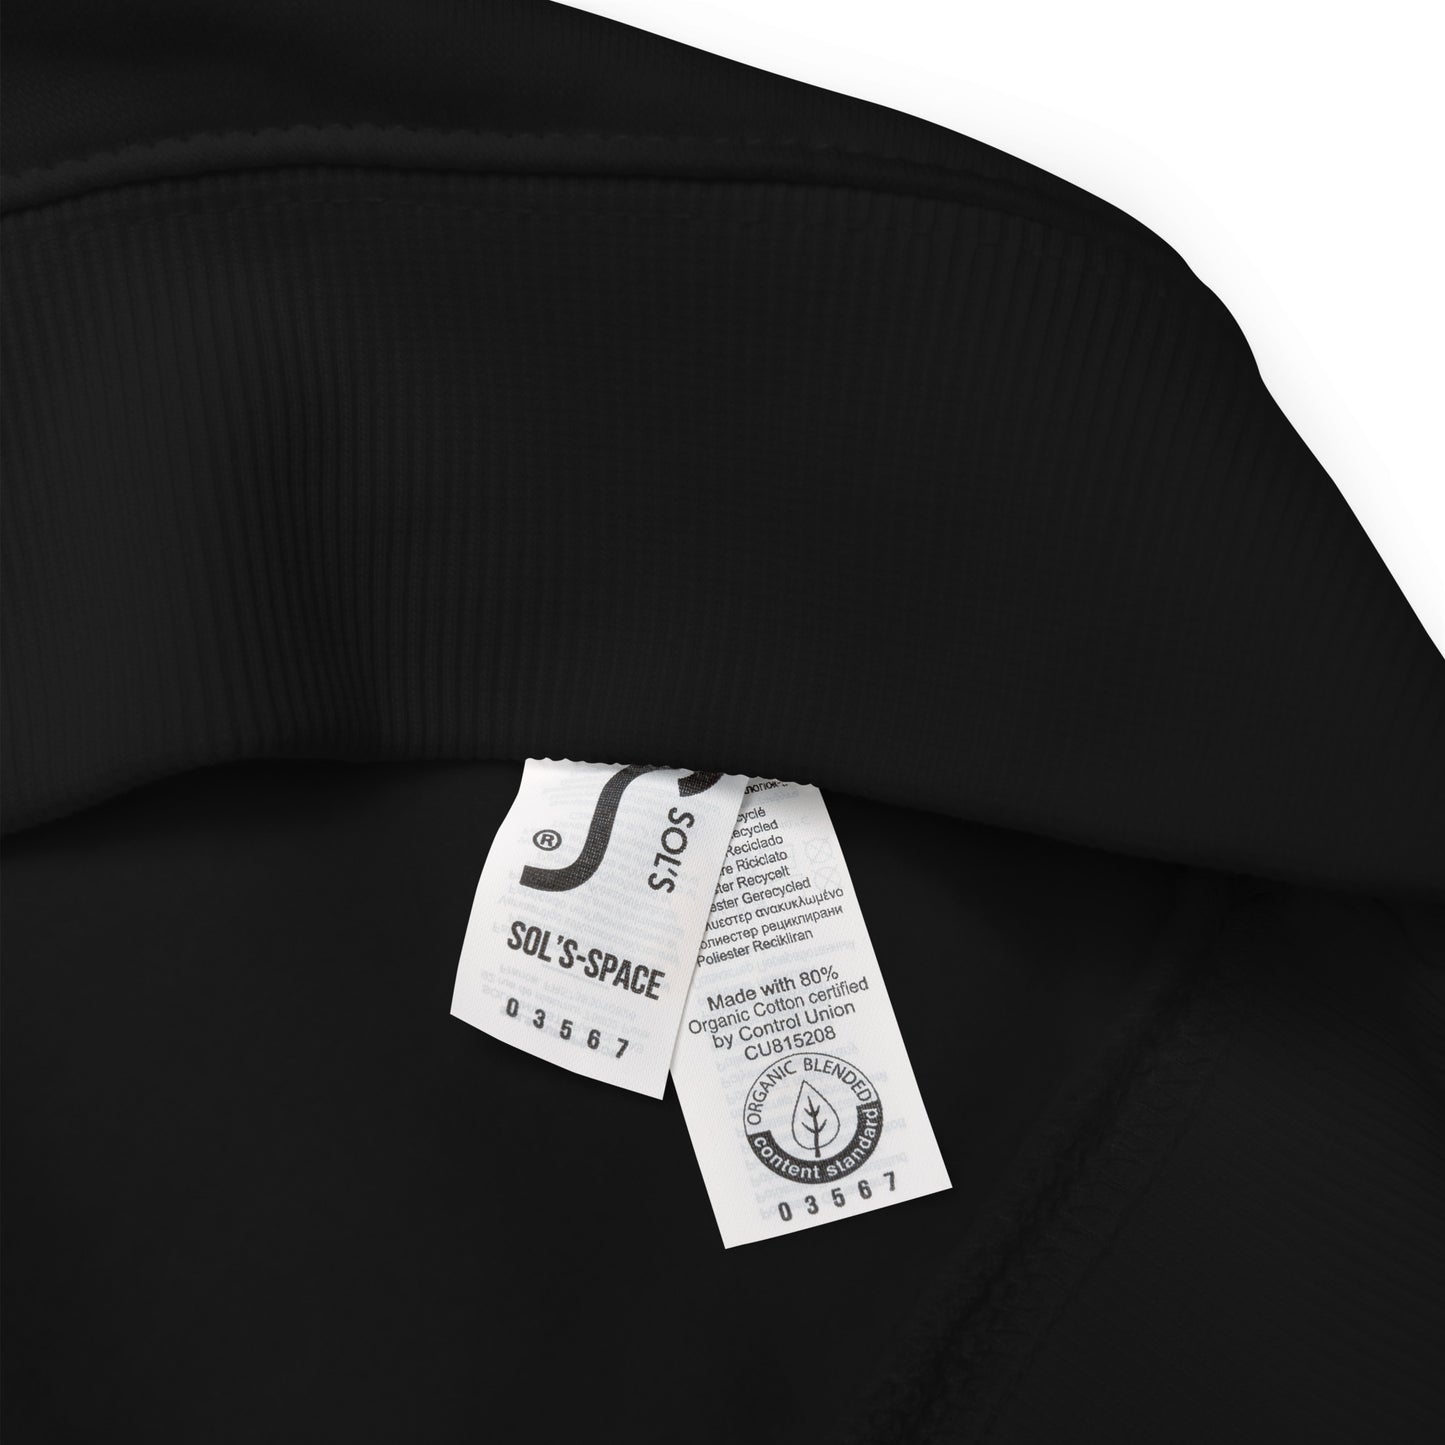 Unisex Organic Sweatshirt/Losing-Is-Not-An-Option